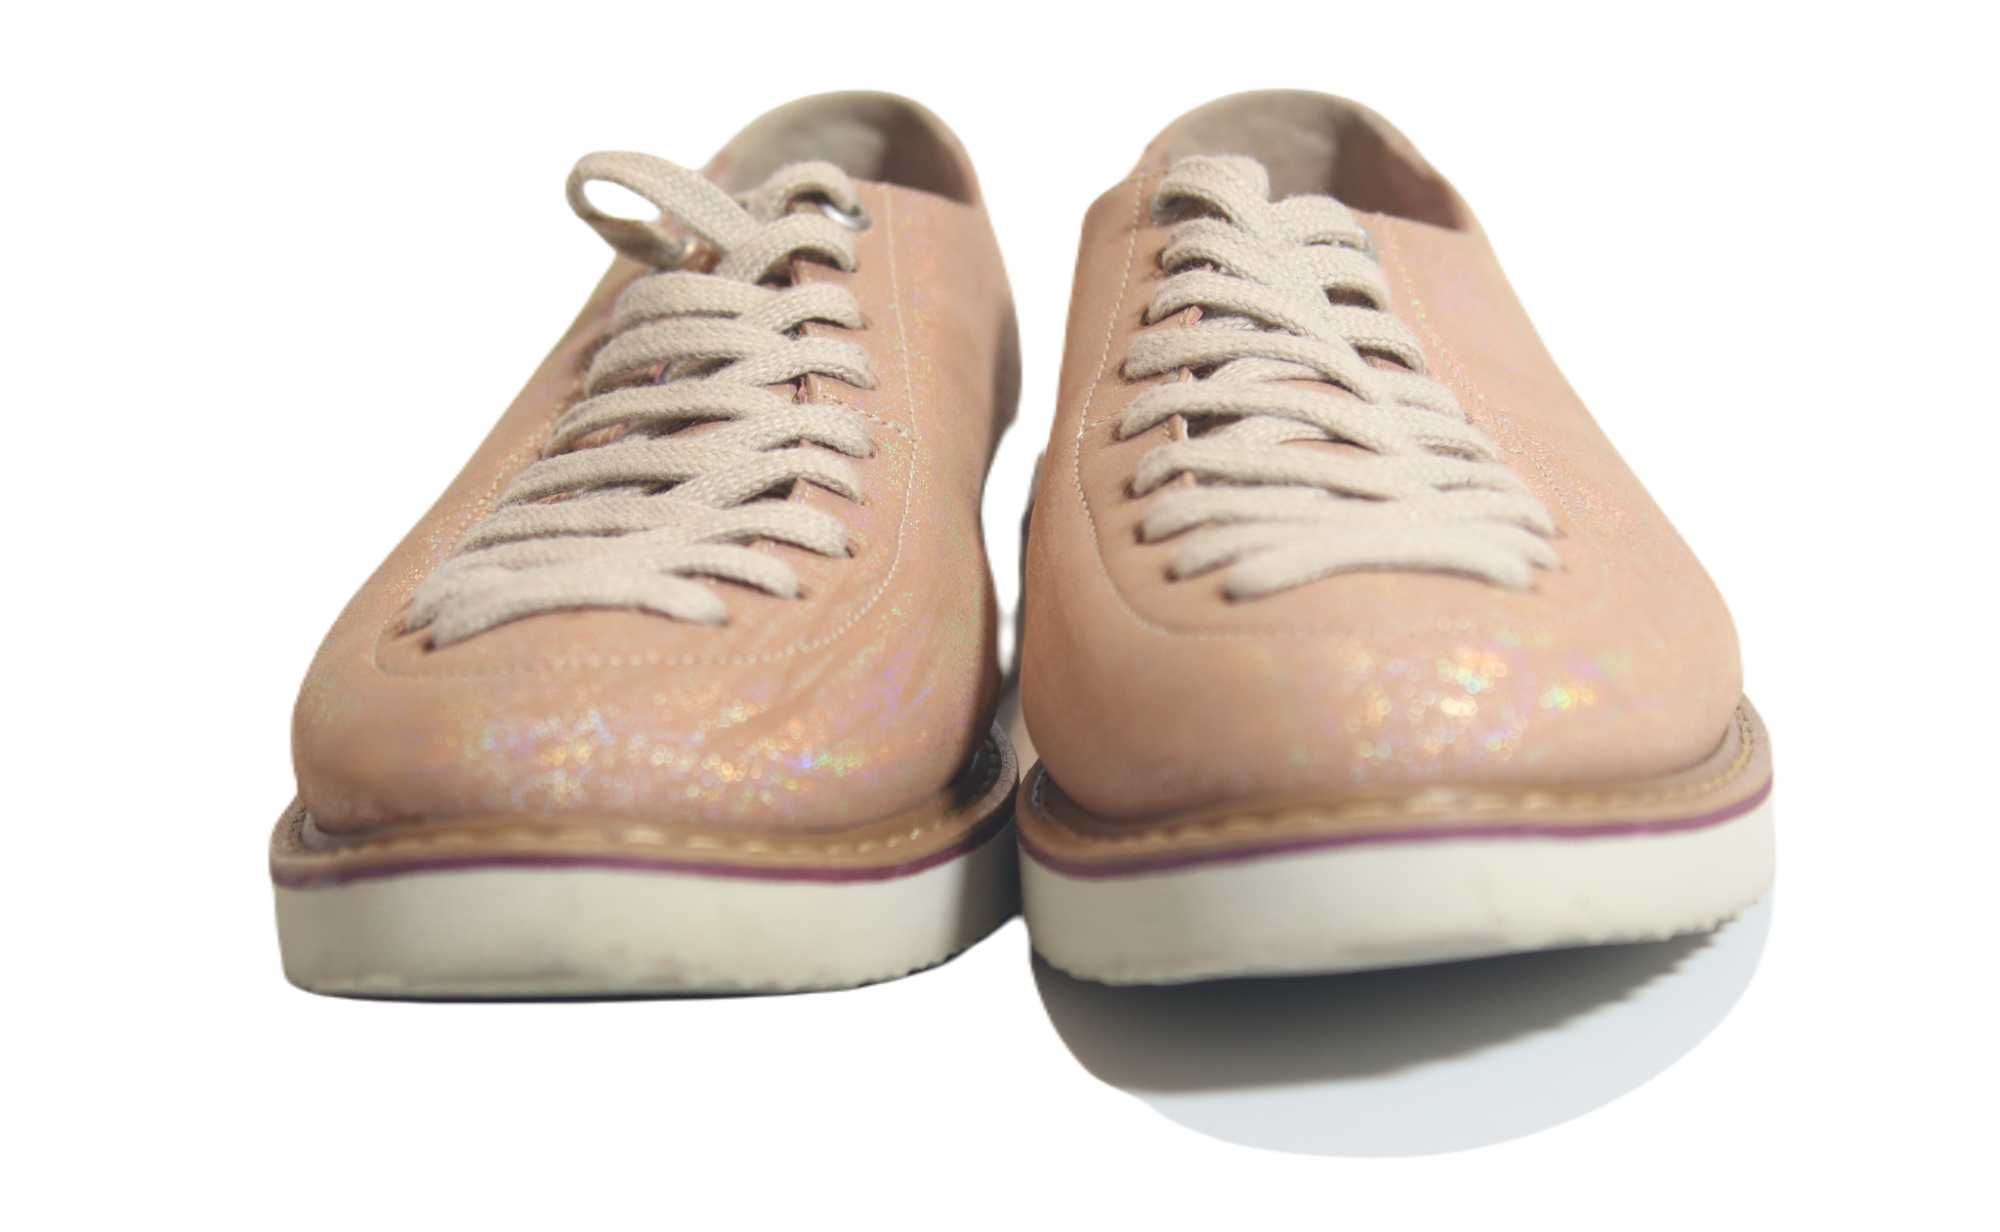 Pantofi Dasha primavara piele naturala marimea 38 interior 25 cm